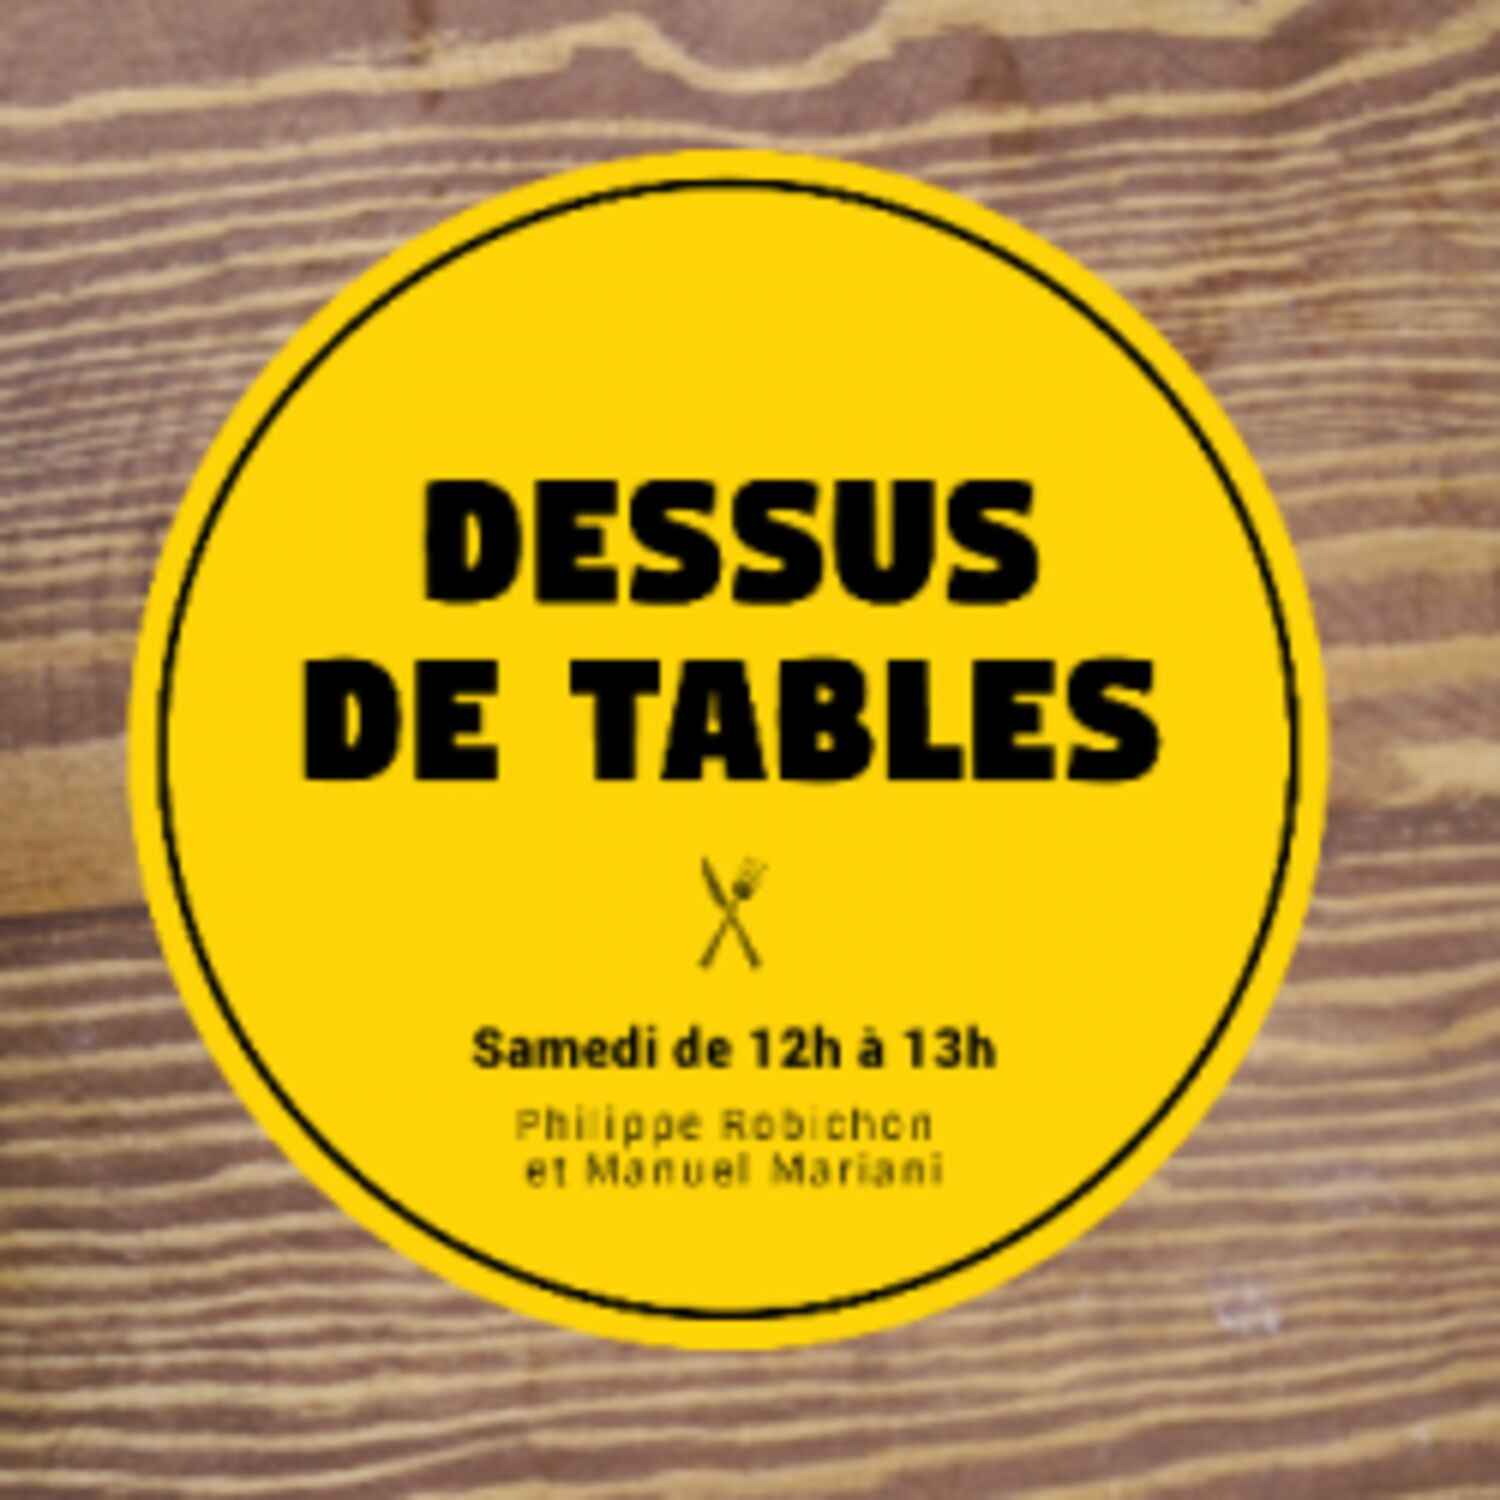 Dessus de tables 19-12-2020